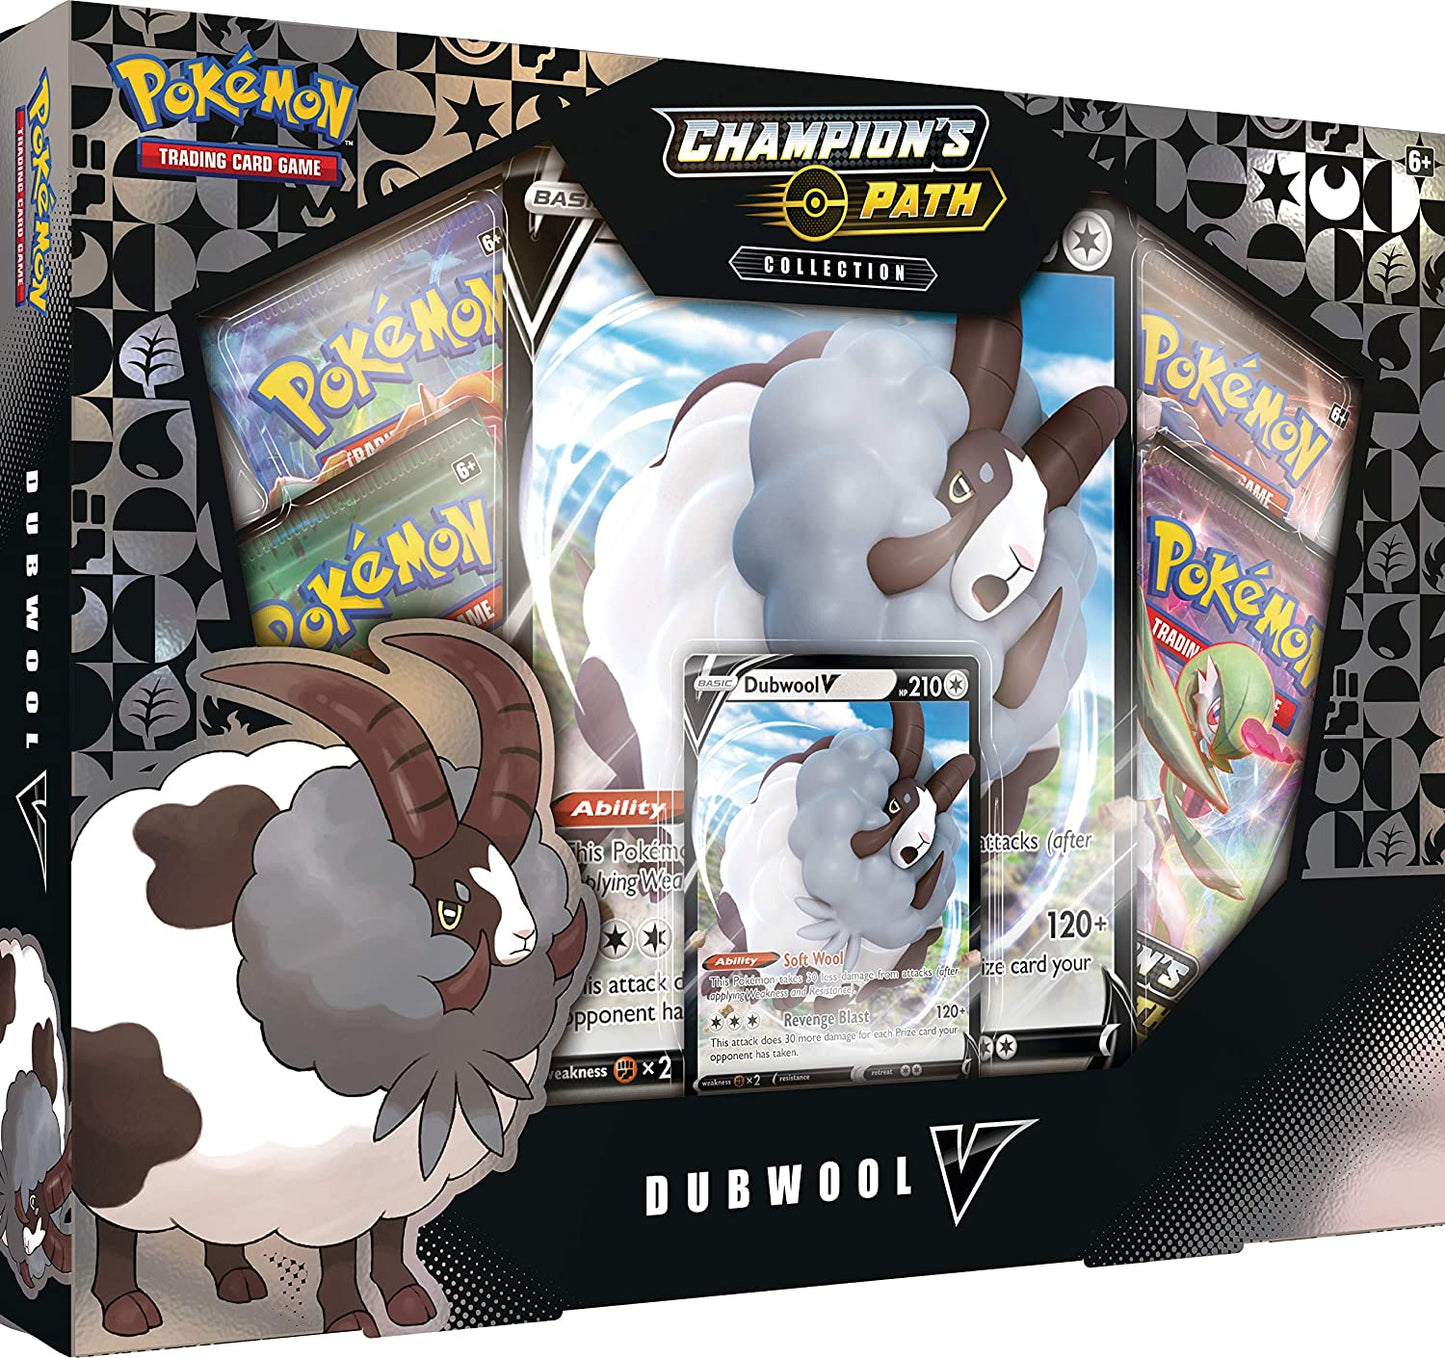 Pokémon - Champion's Path Collection Dubwool V Box